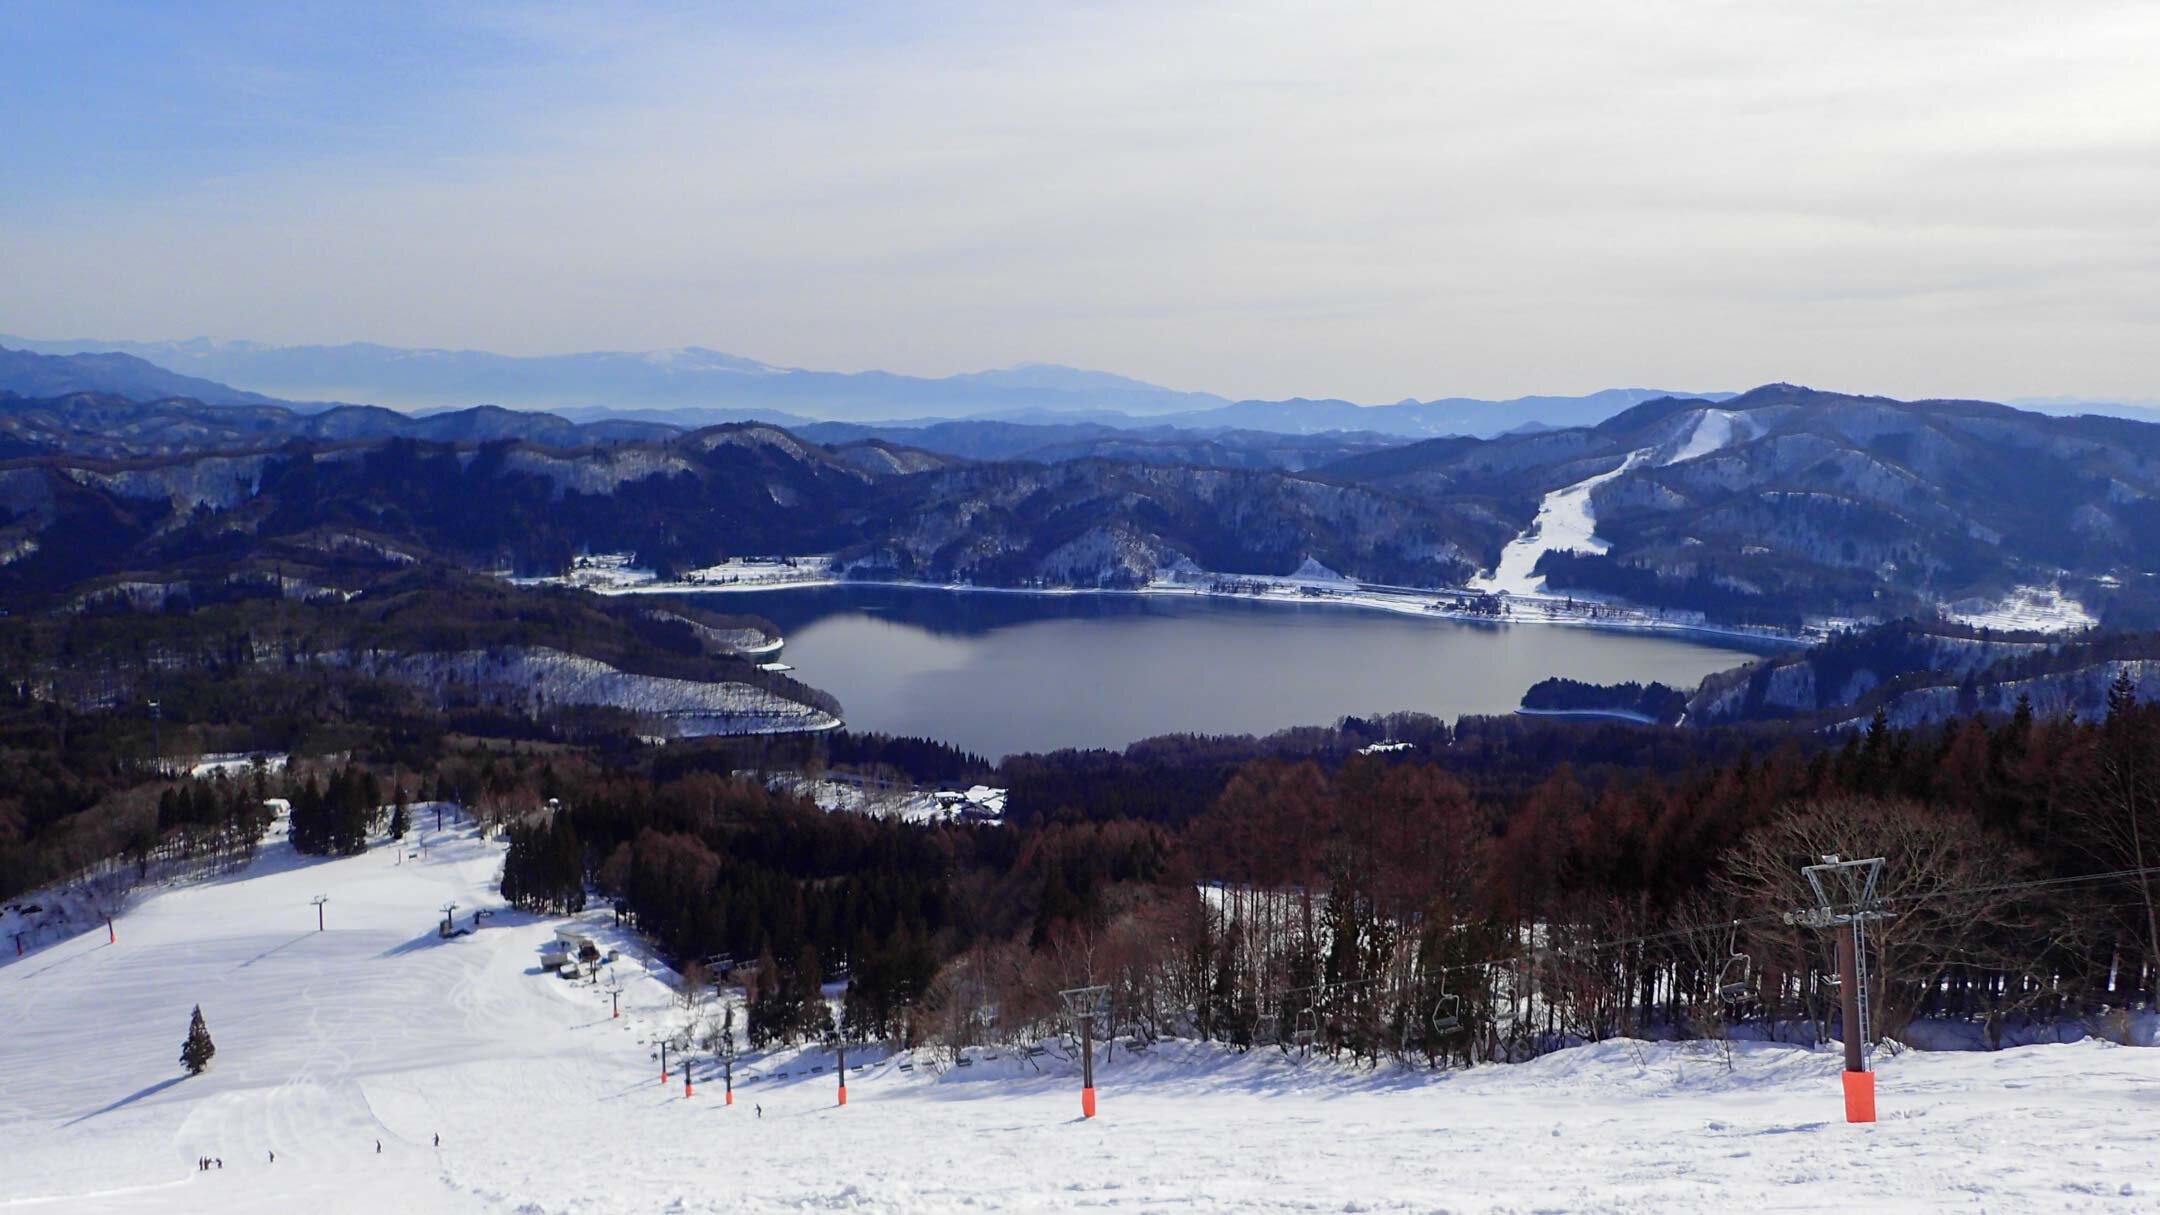 hakuba-ski-resort-photos-12.jpg